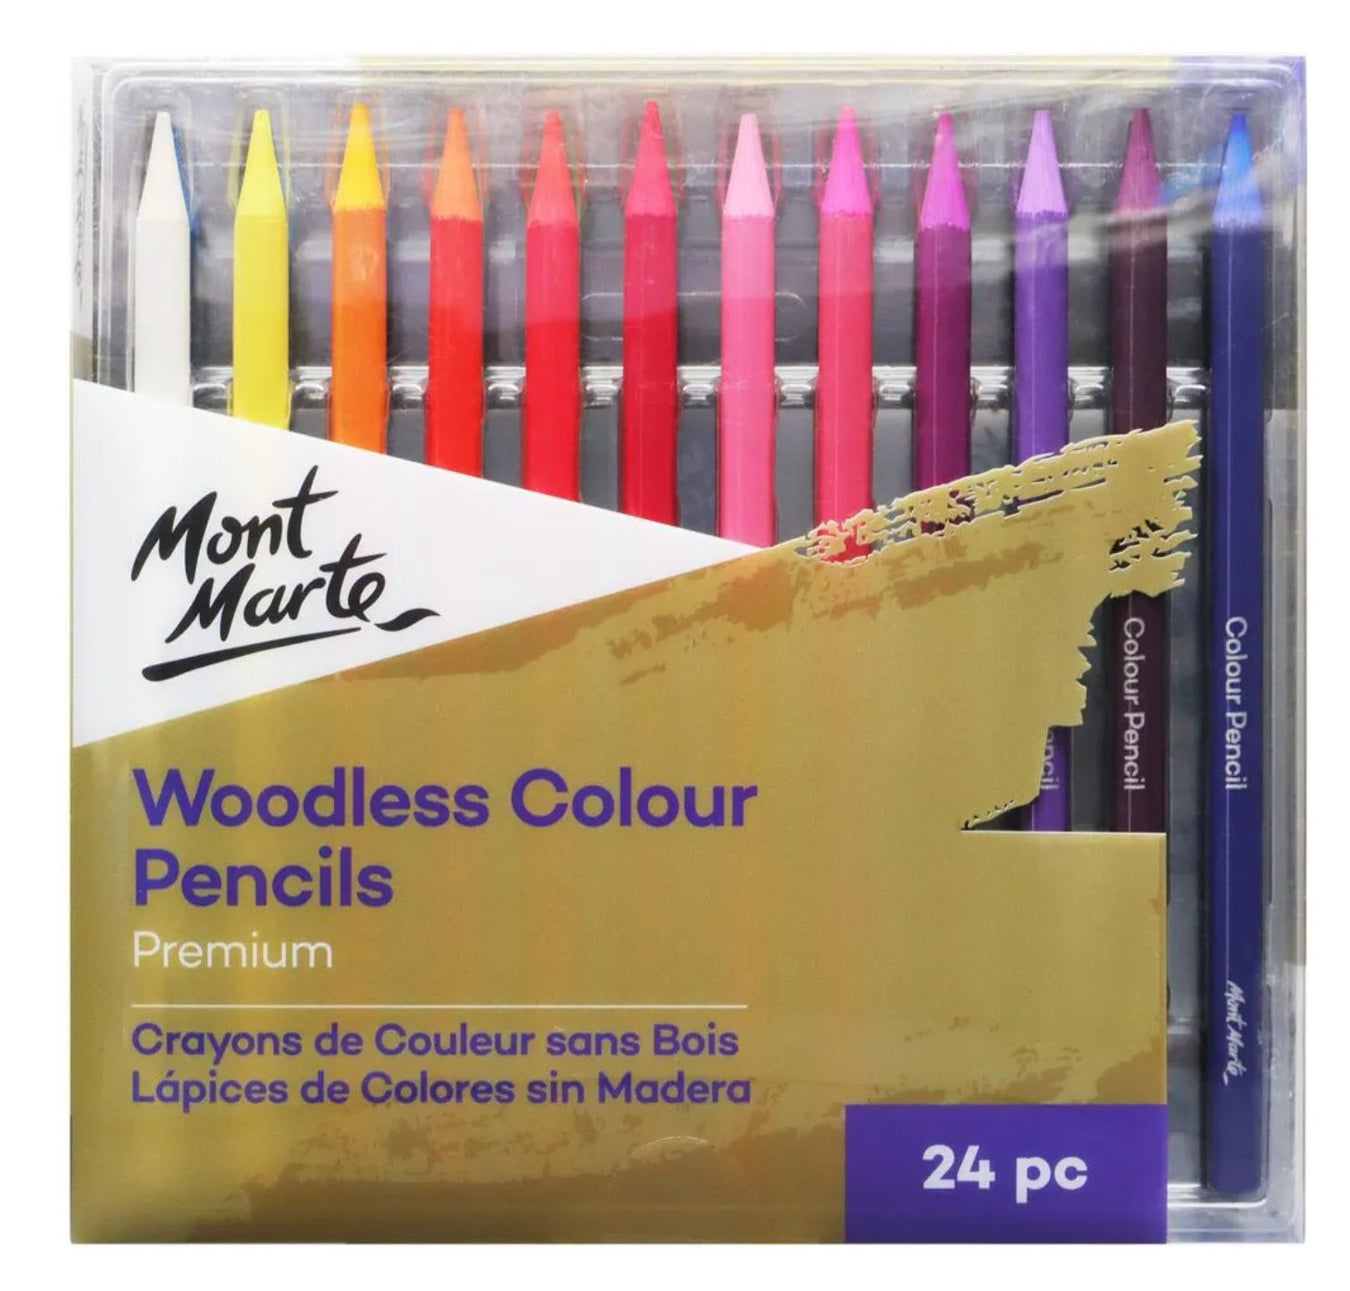 Woodless Coloured Pencils